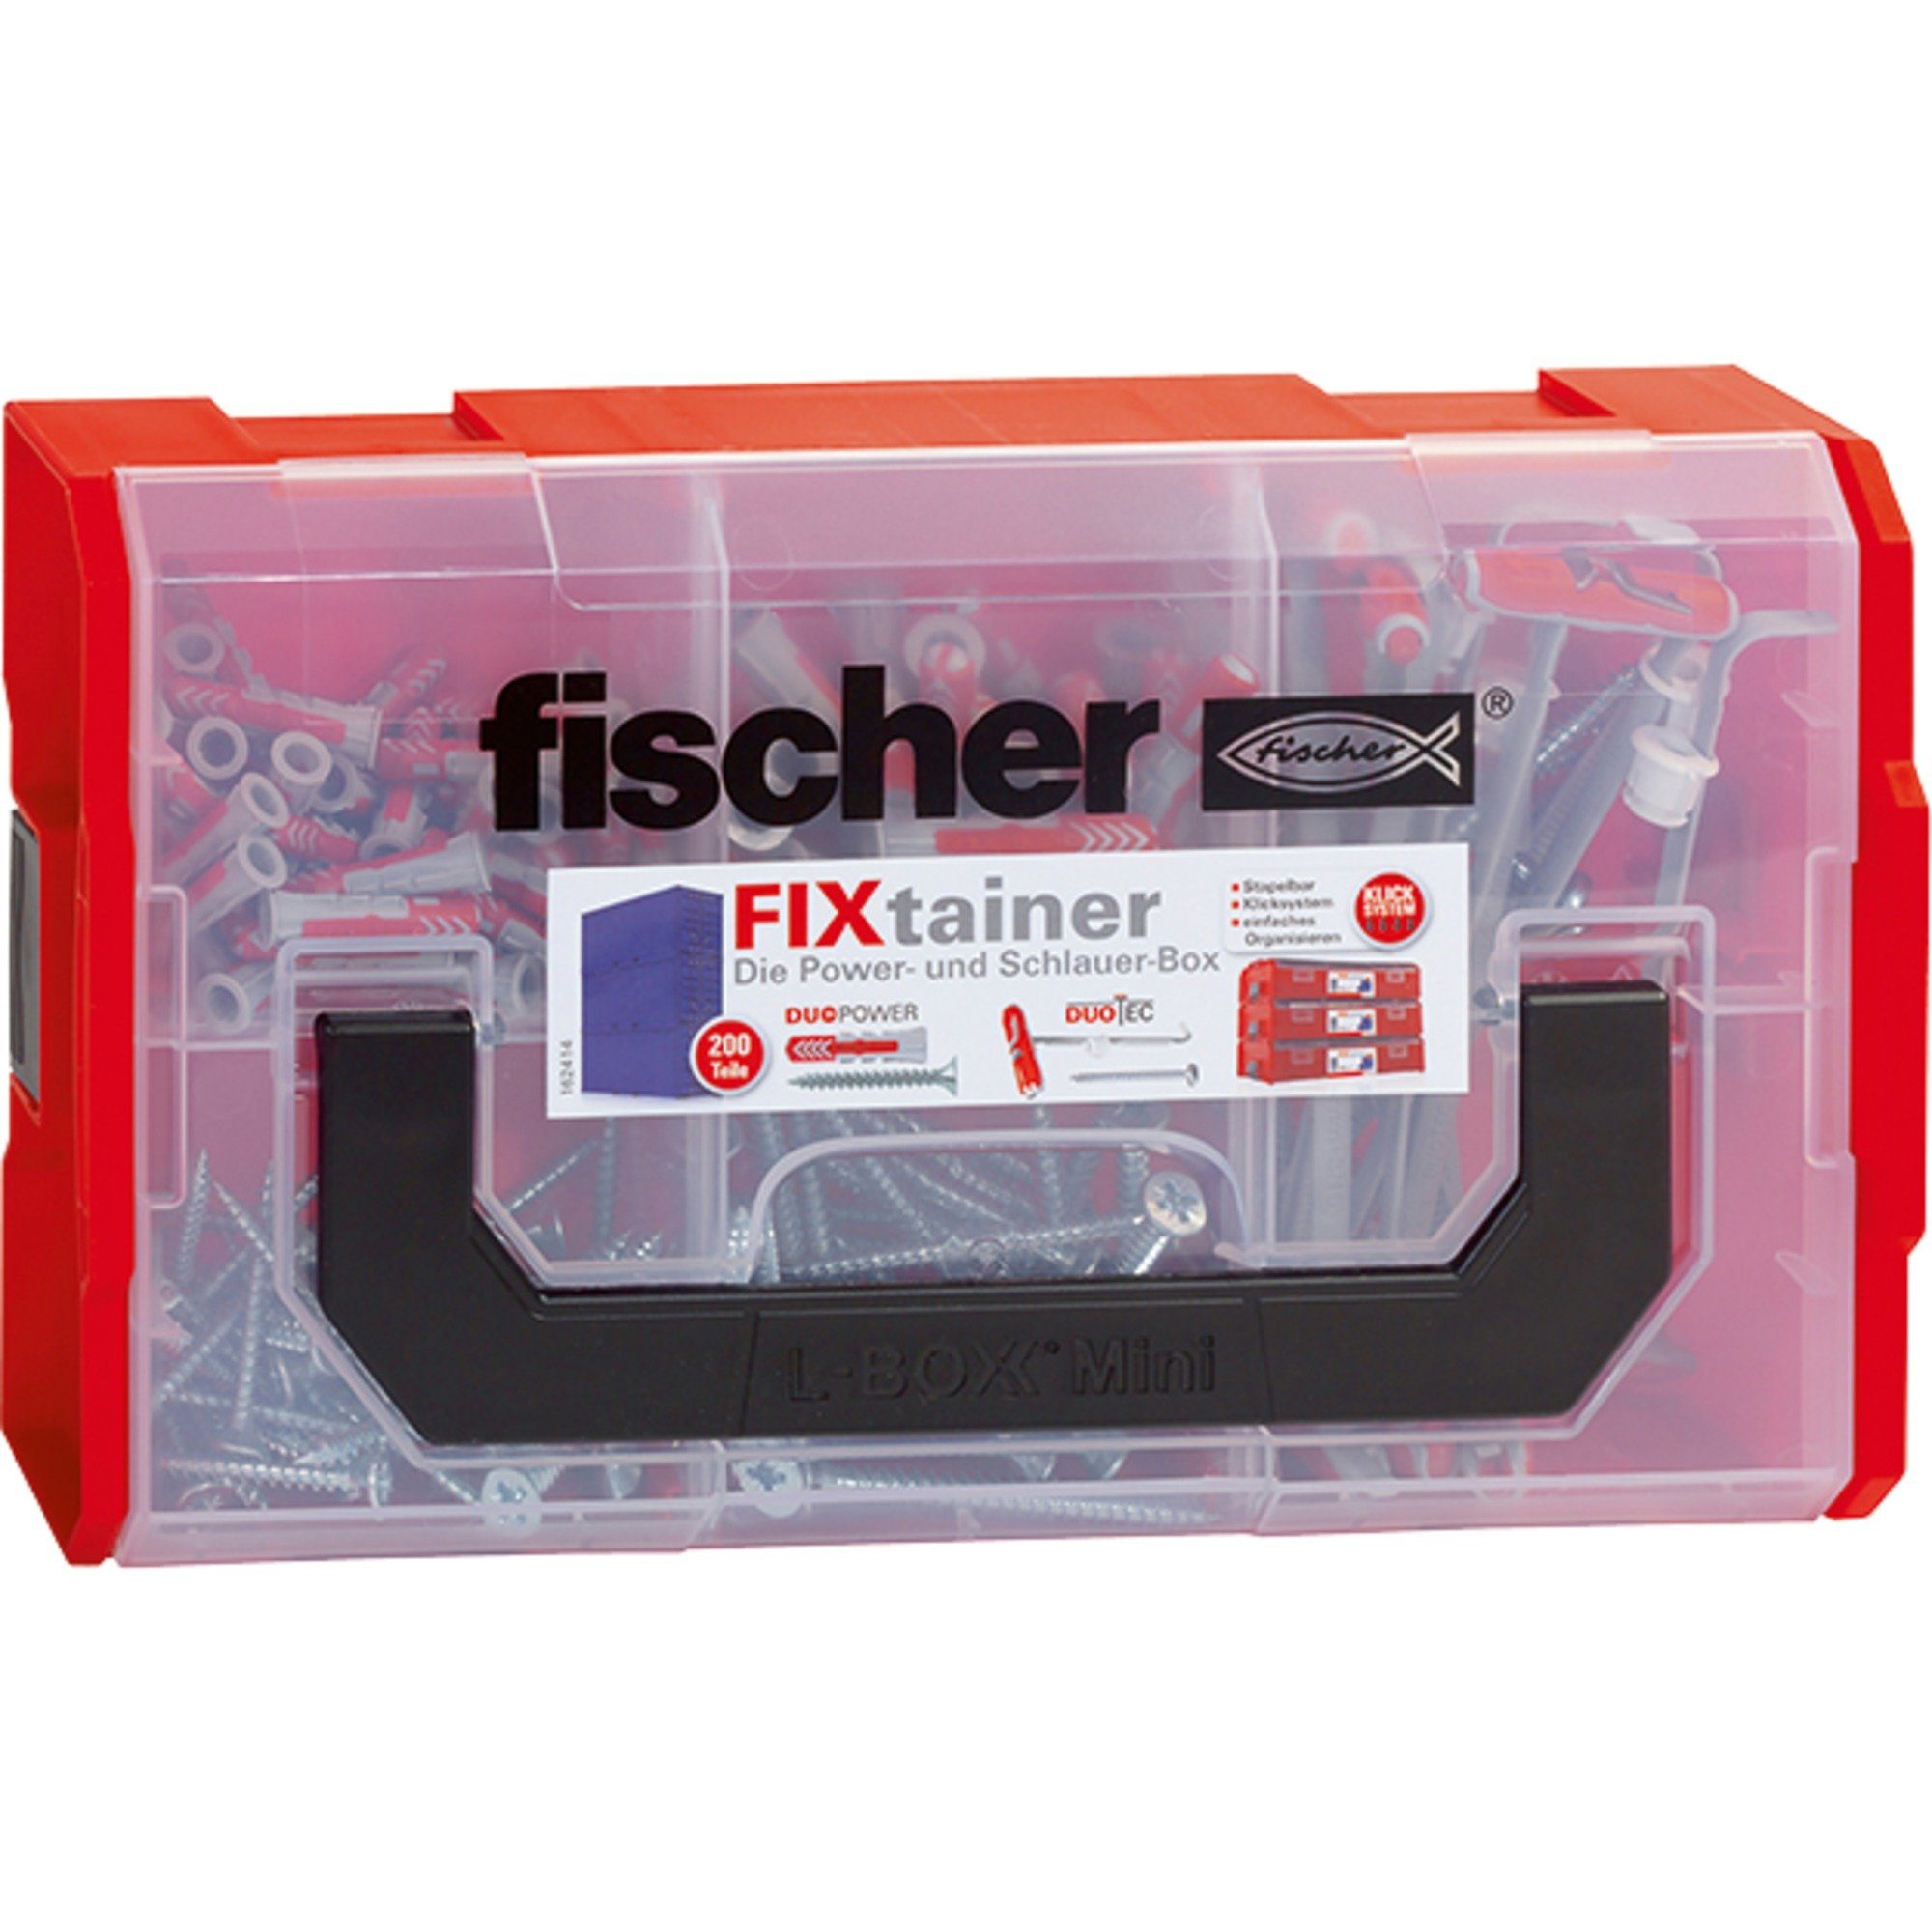 Fischer Universaldübel fischer FixTainer-DUOPOWER/DUOTEC, Dübel, (mit